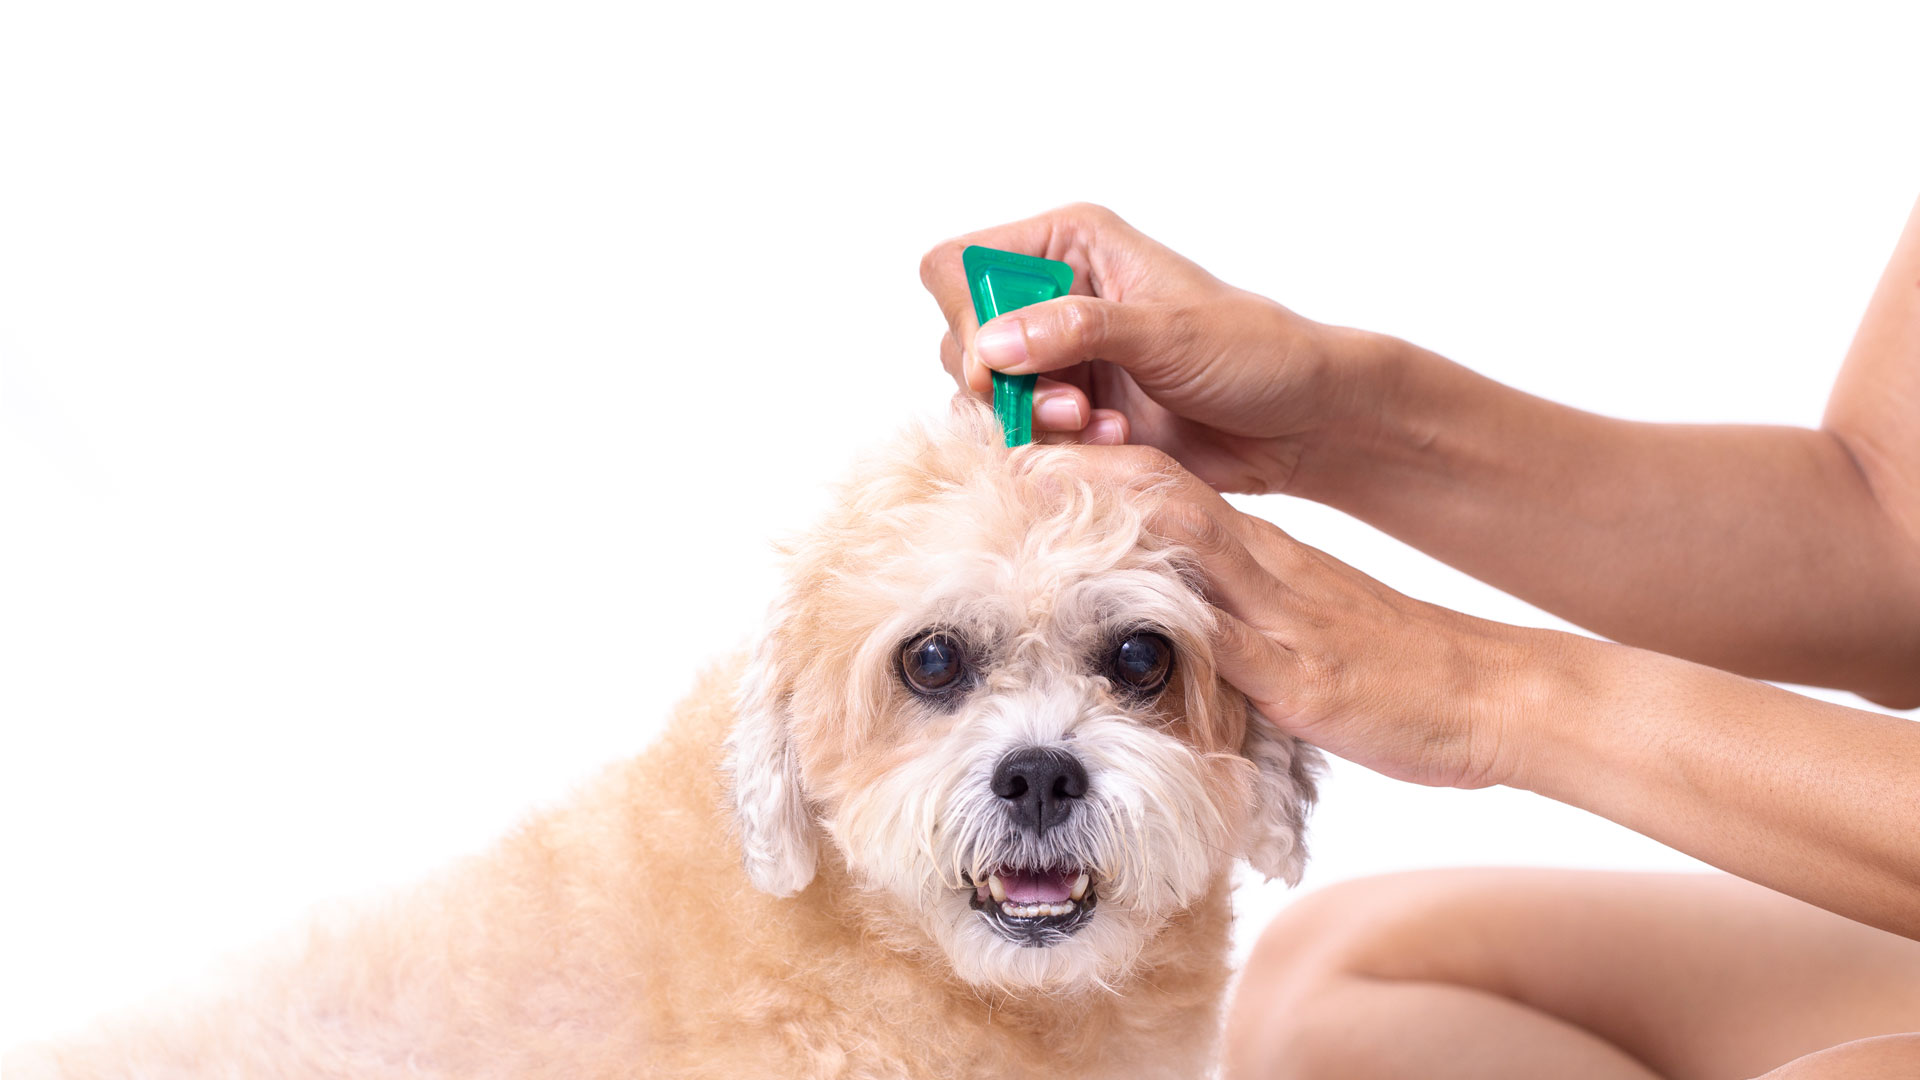 Flea treatment being put onto a dog